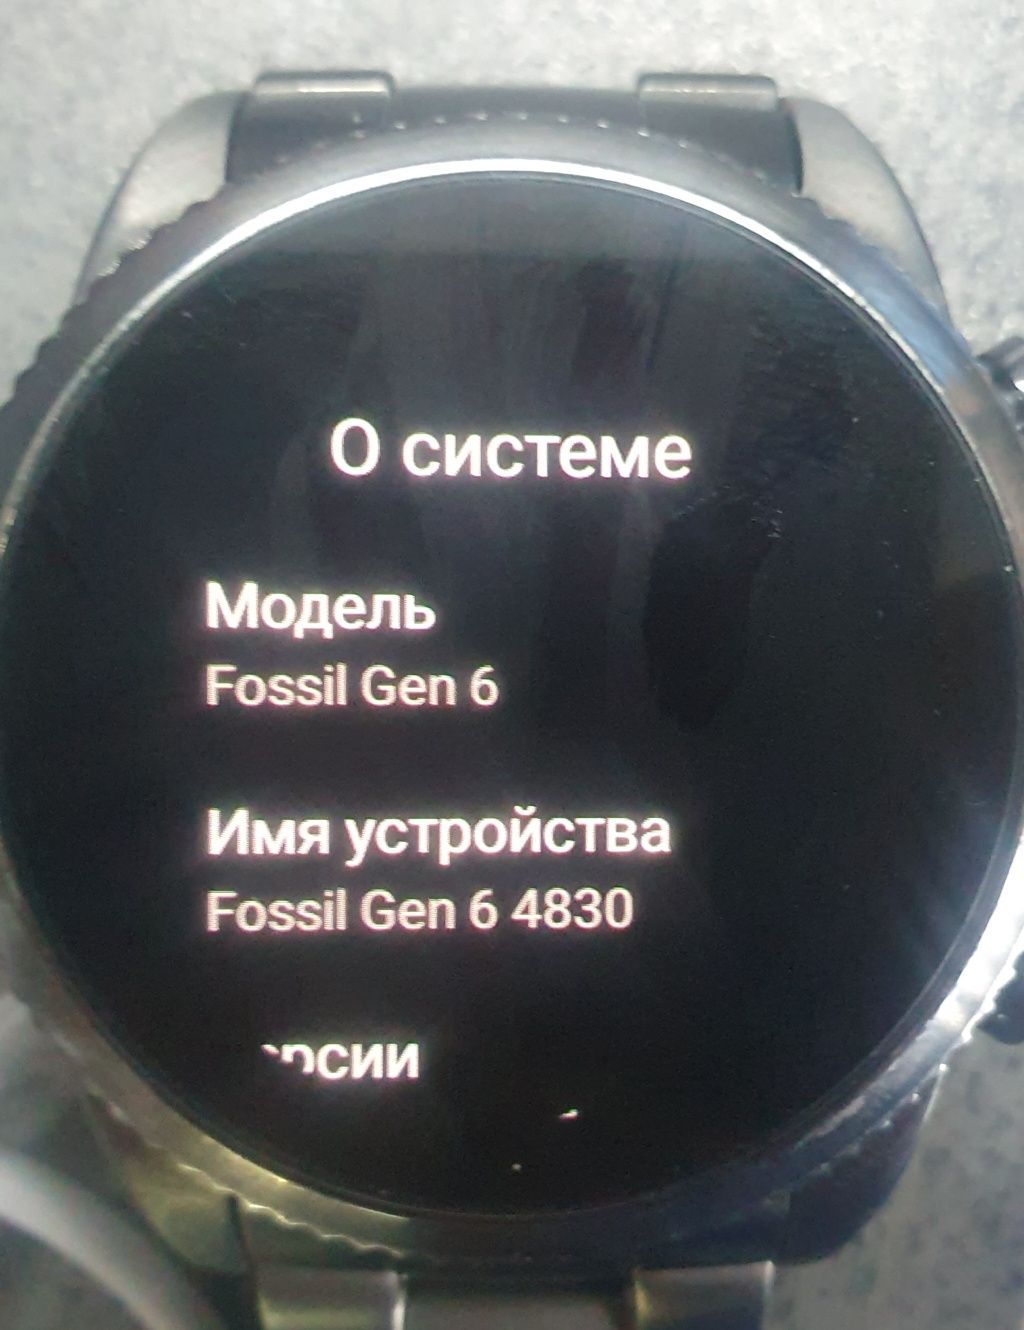 Умные часы FOSSIL Gen 6 4830